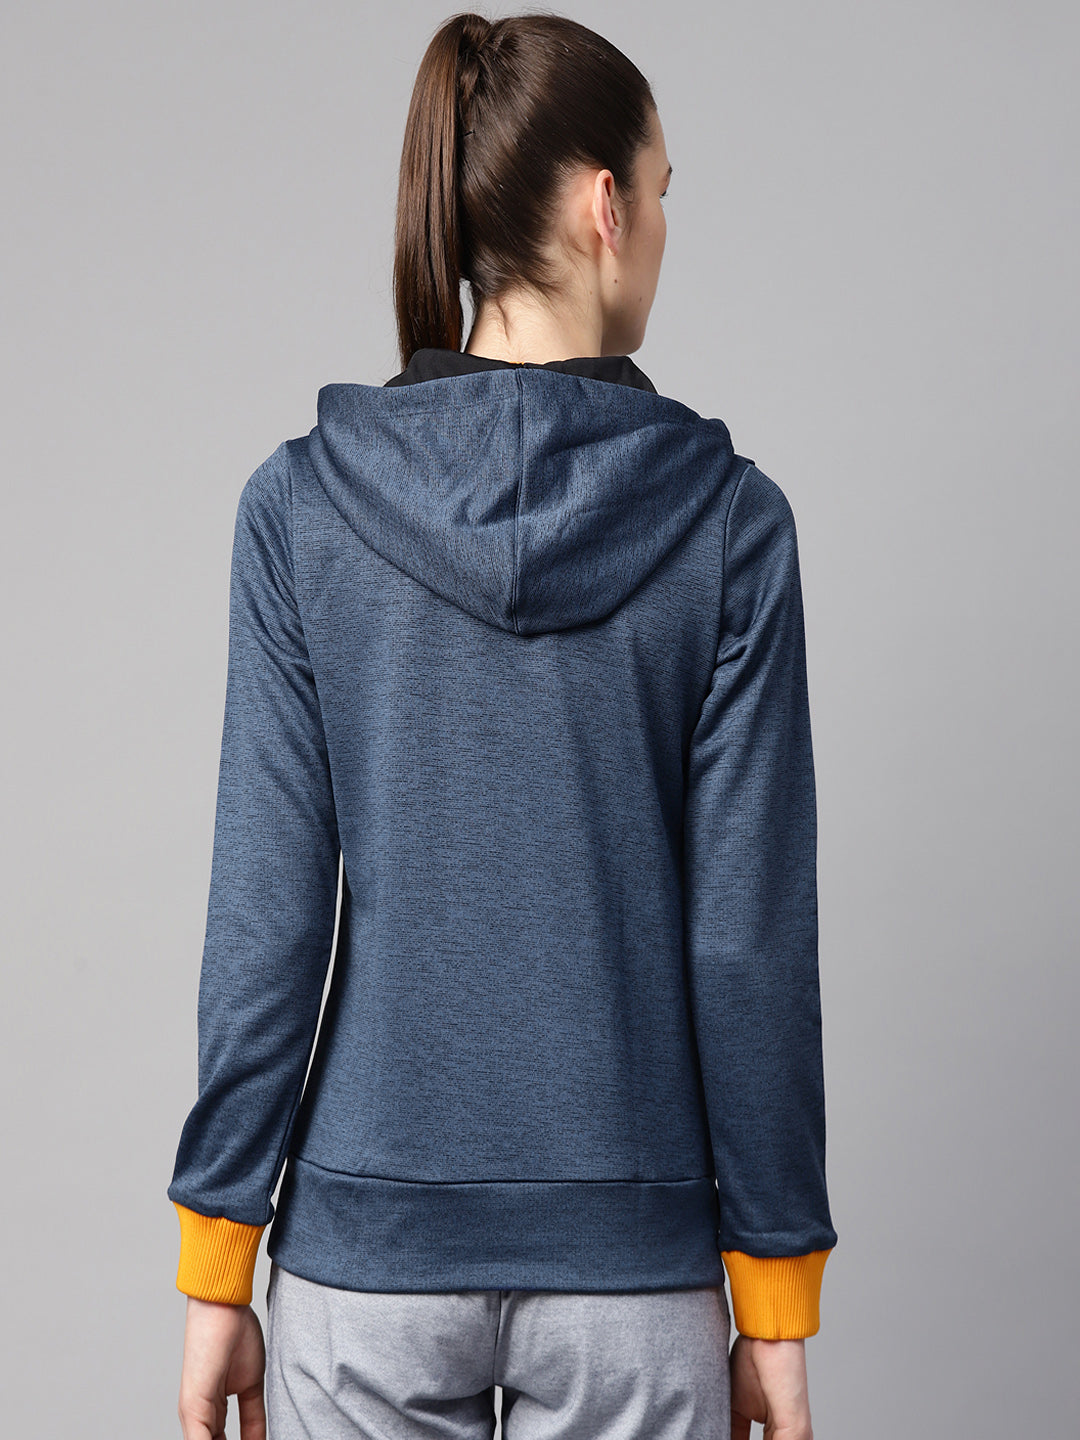 Alcis Women Navy Blue Self Design Hooded Sweatshirt